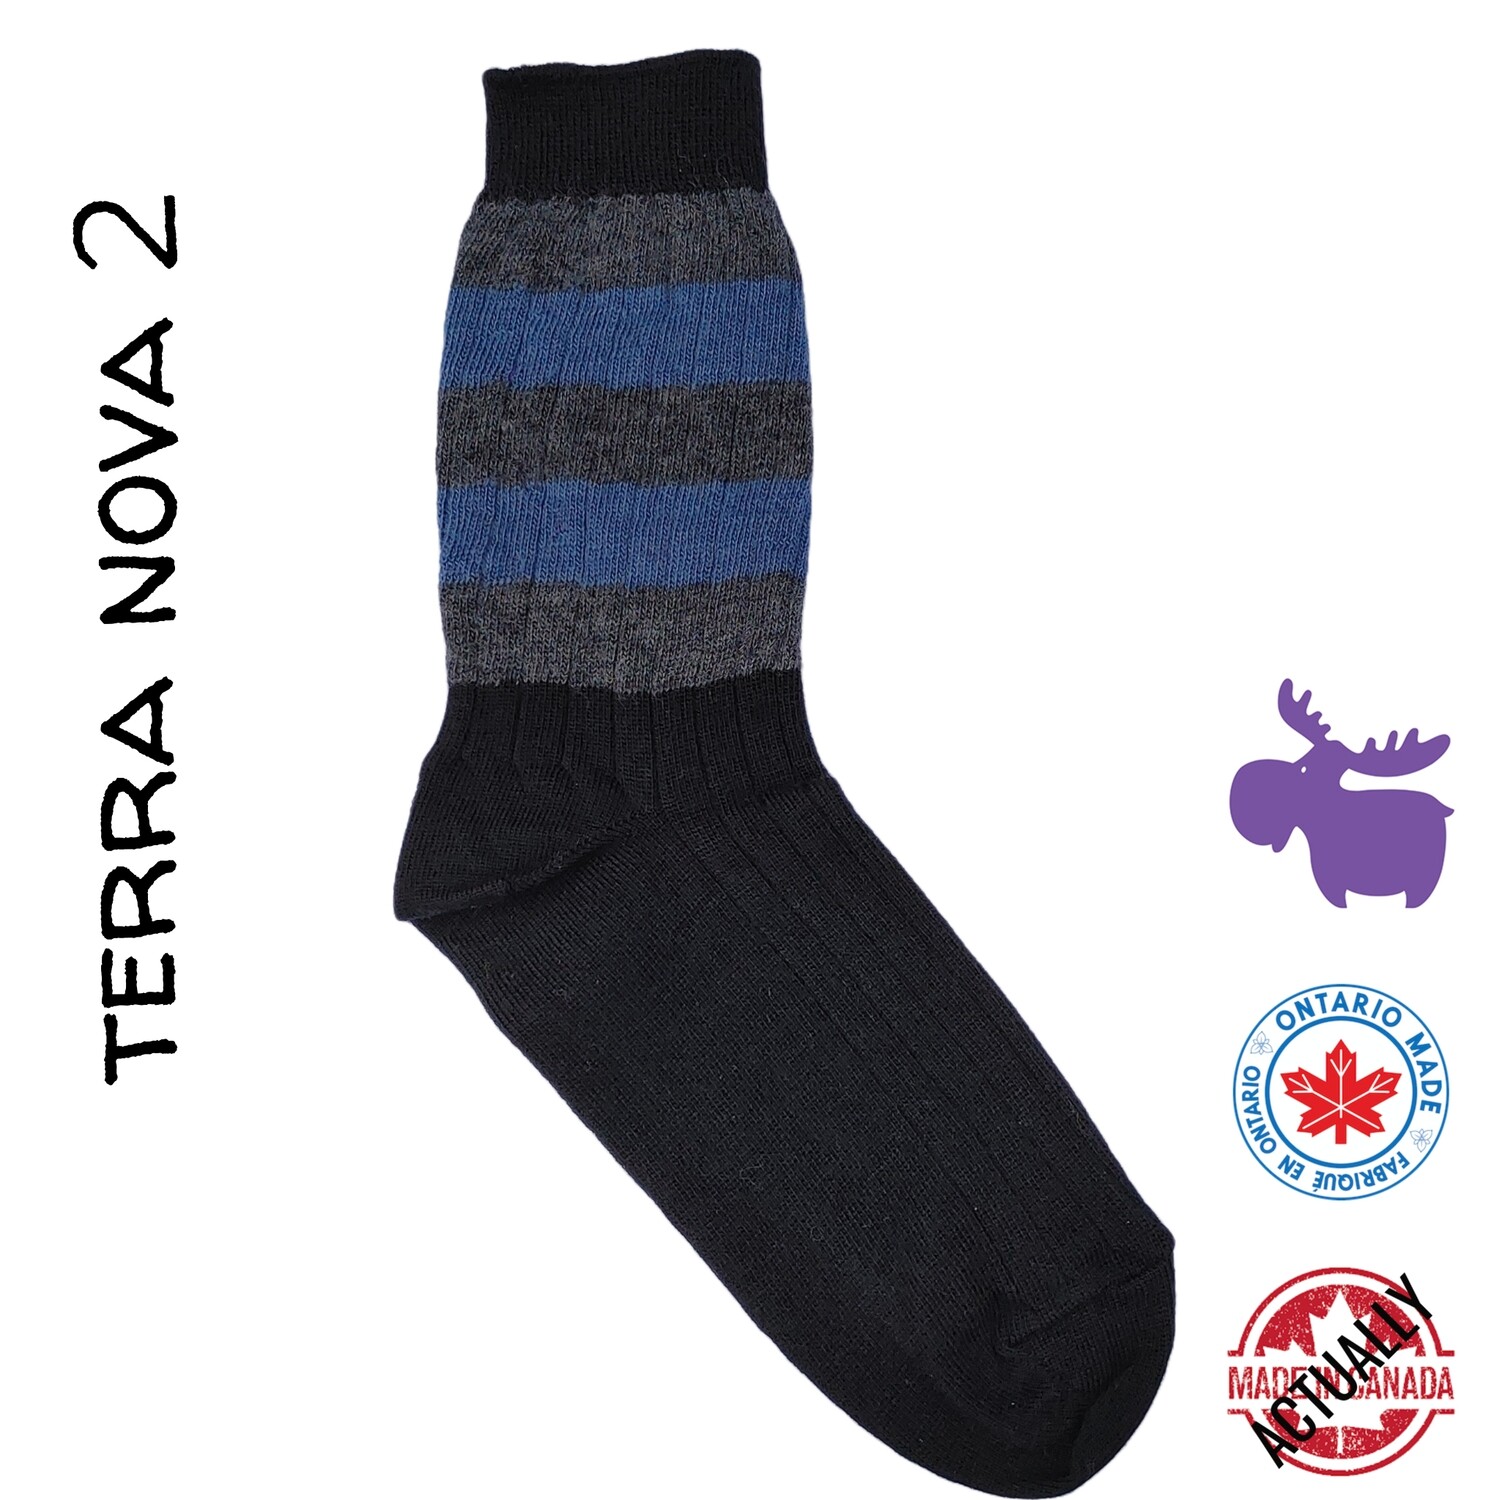 Terra Nova 2 Merino Wool Crew Sock